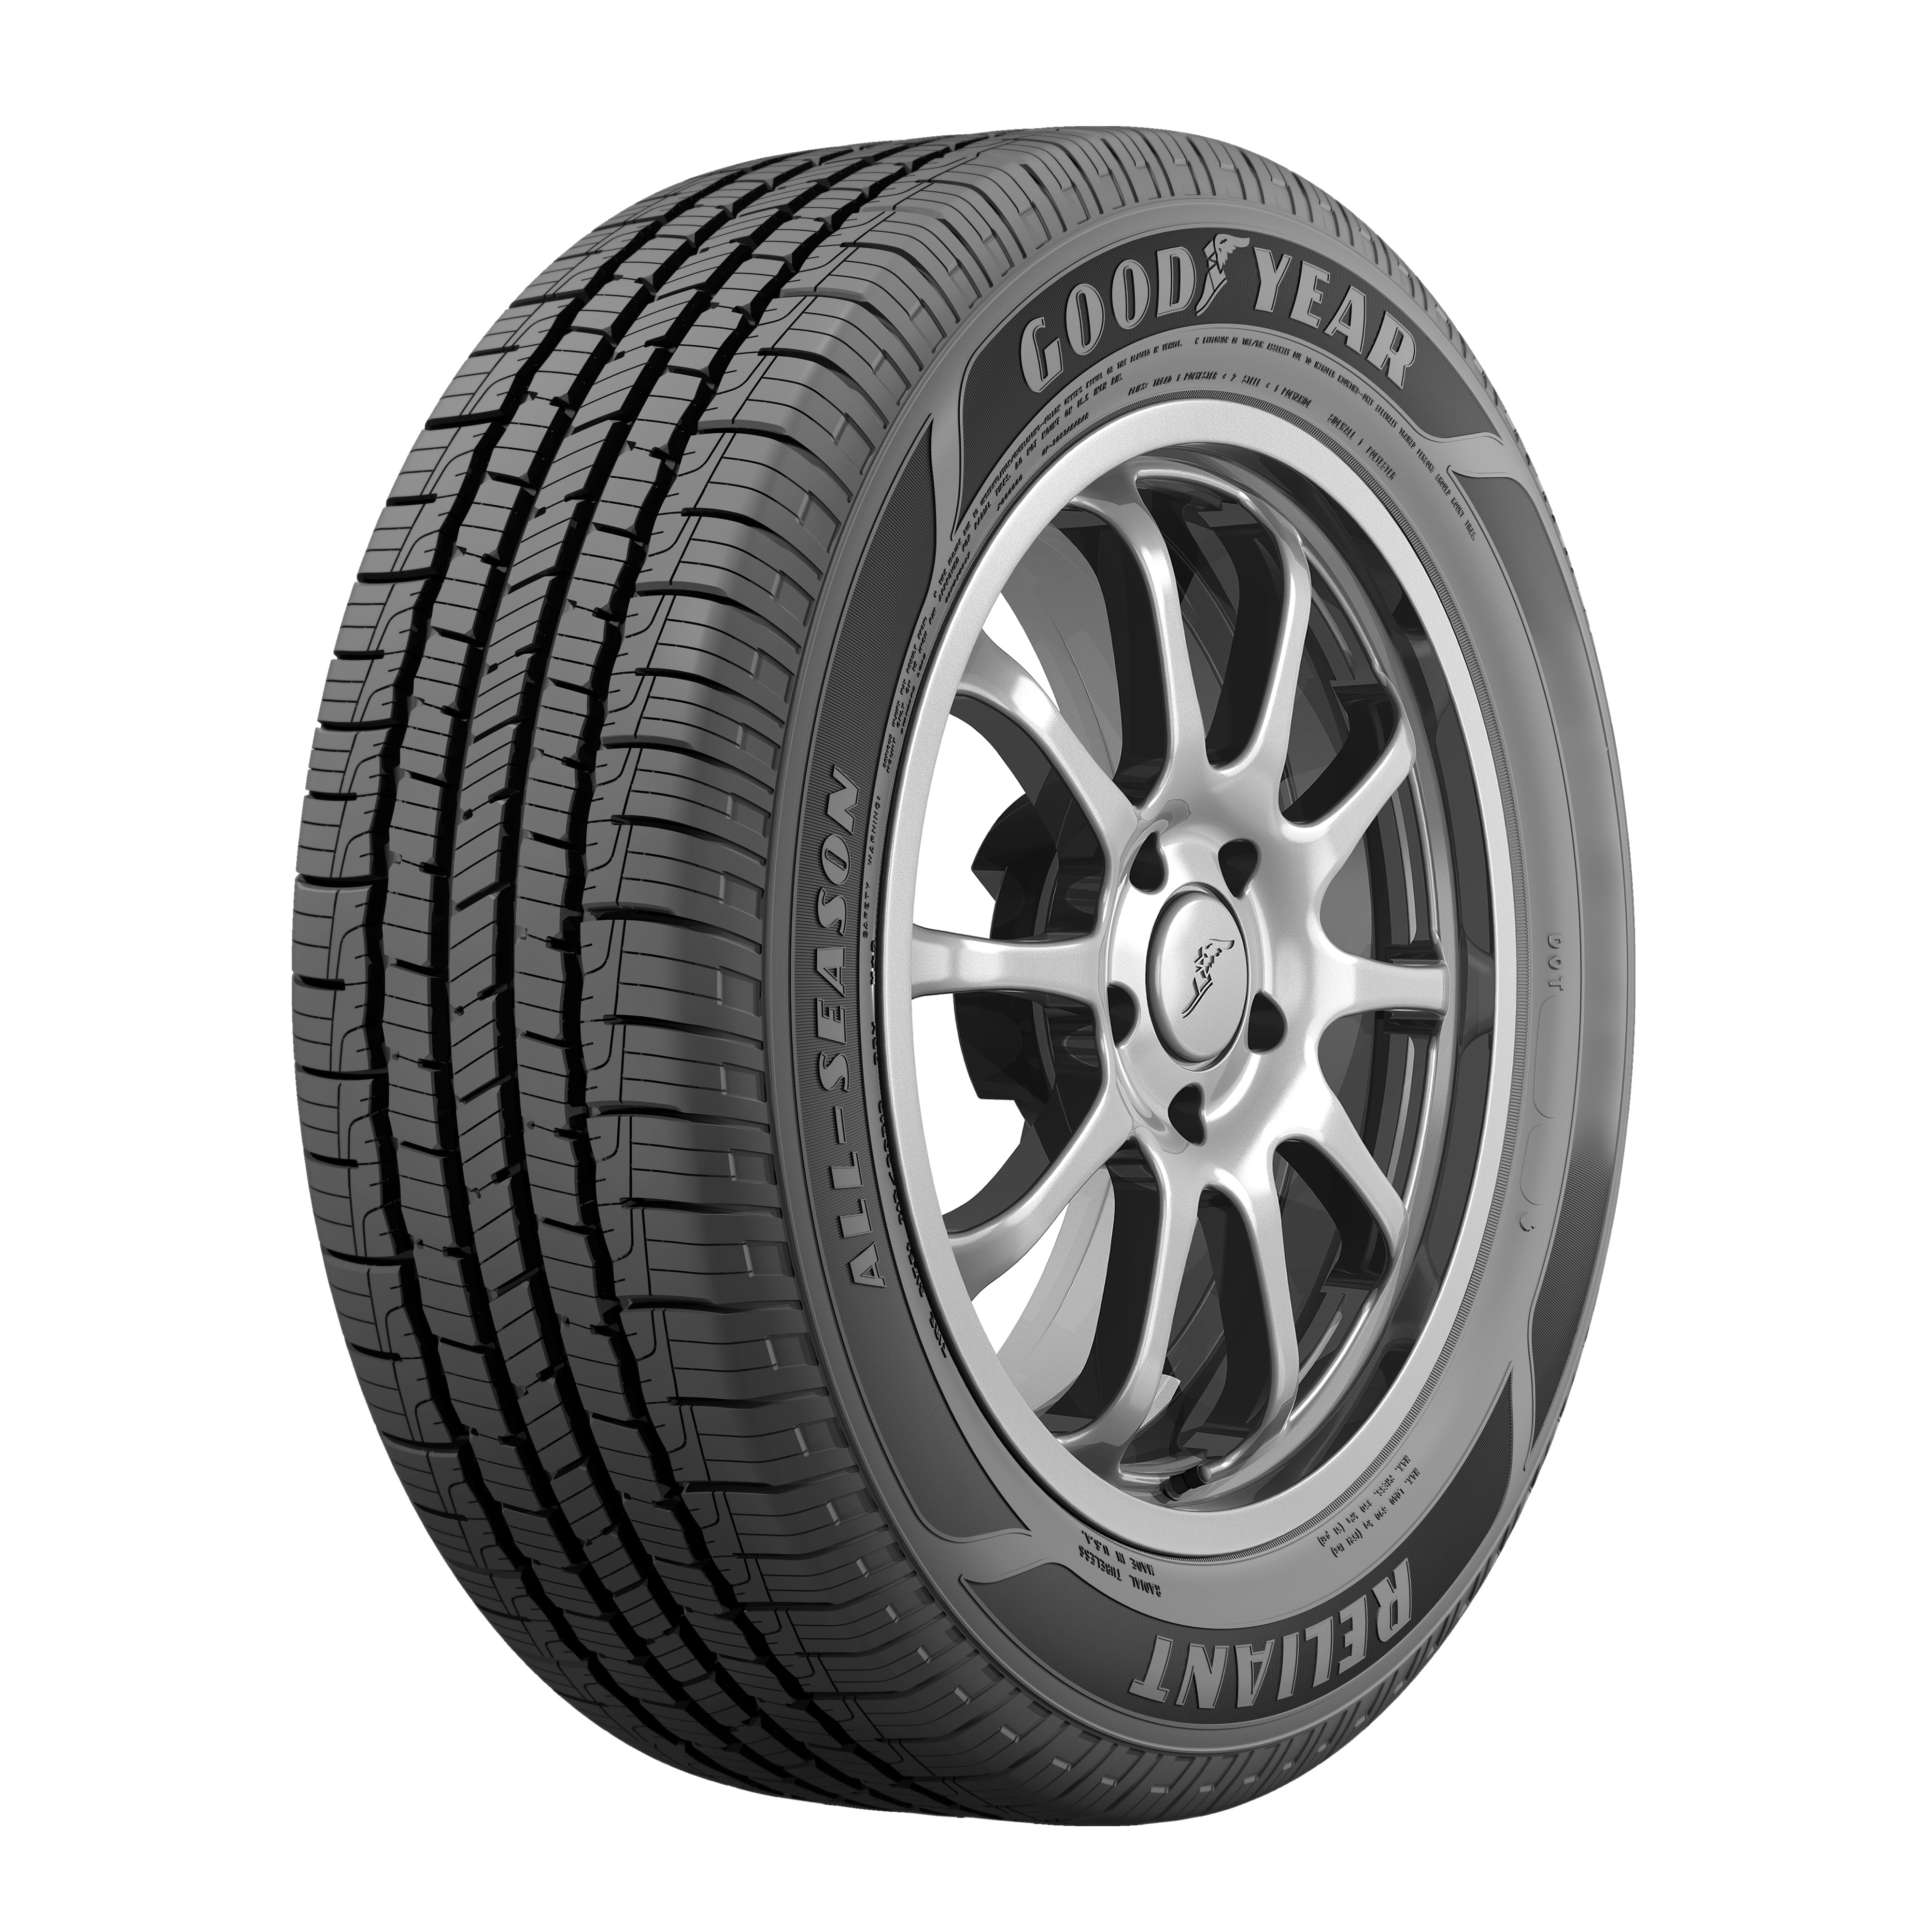 Goodyear Reliant All-Season 205/65R15 94H Tire